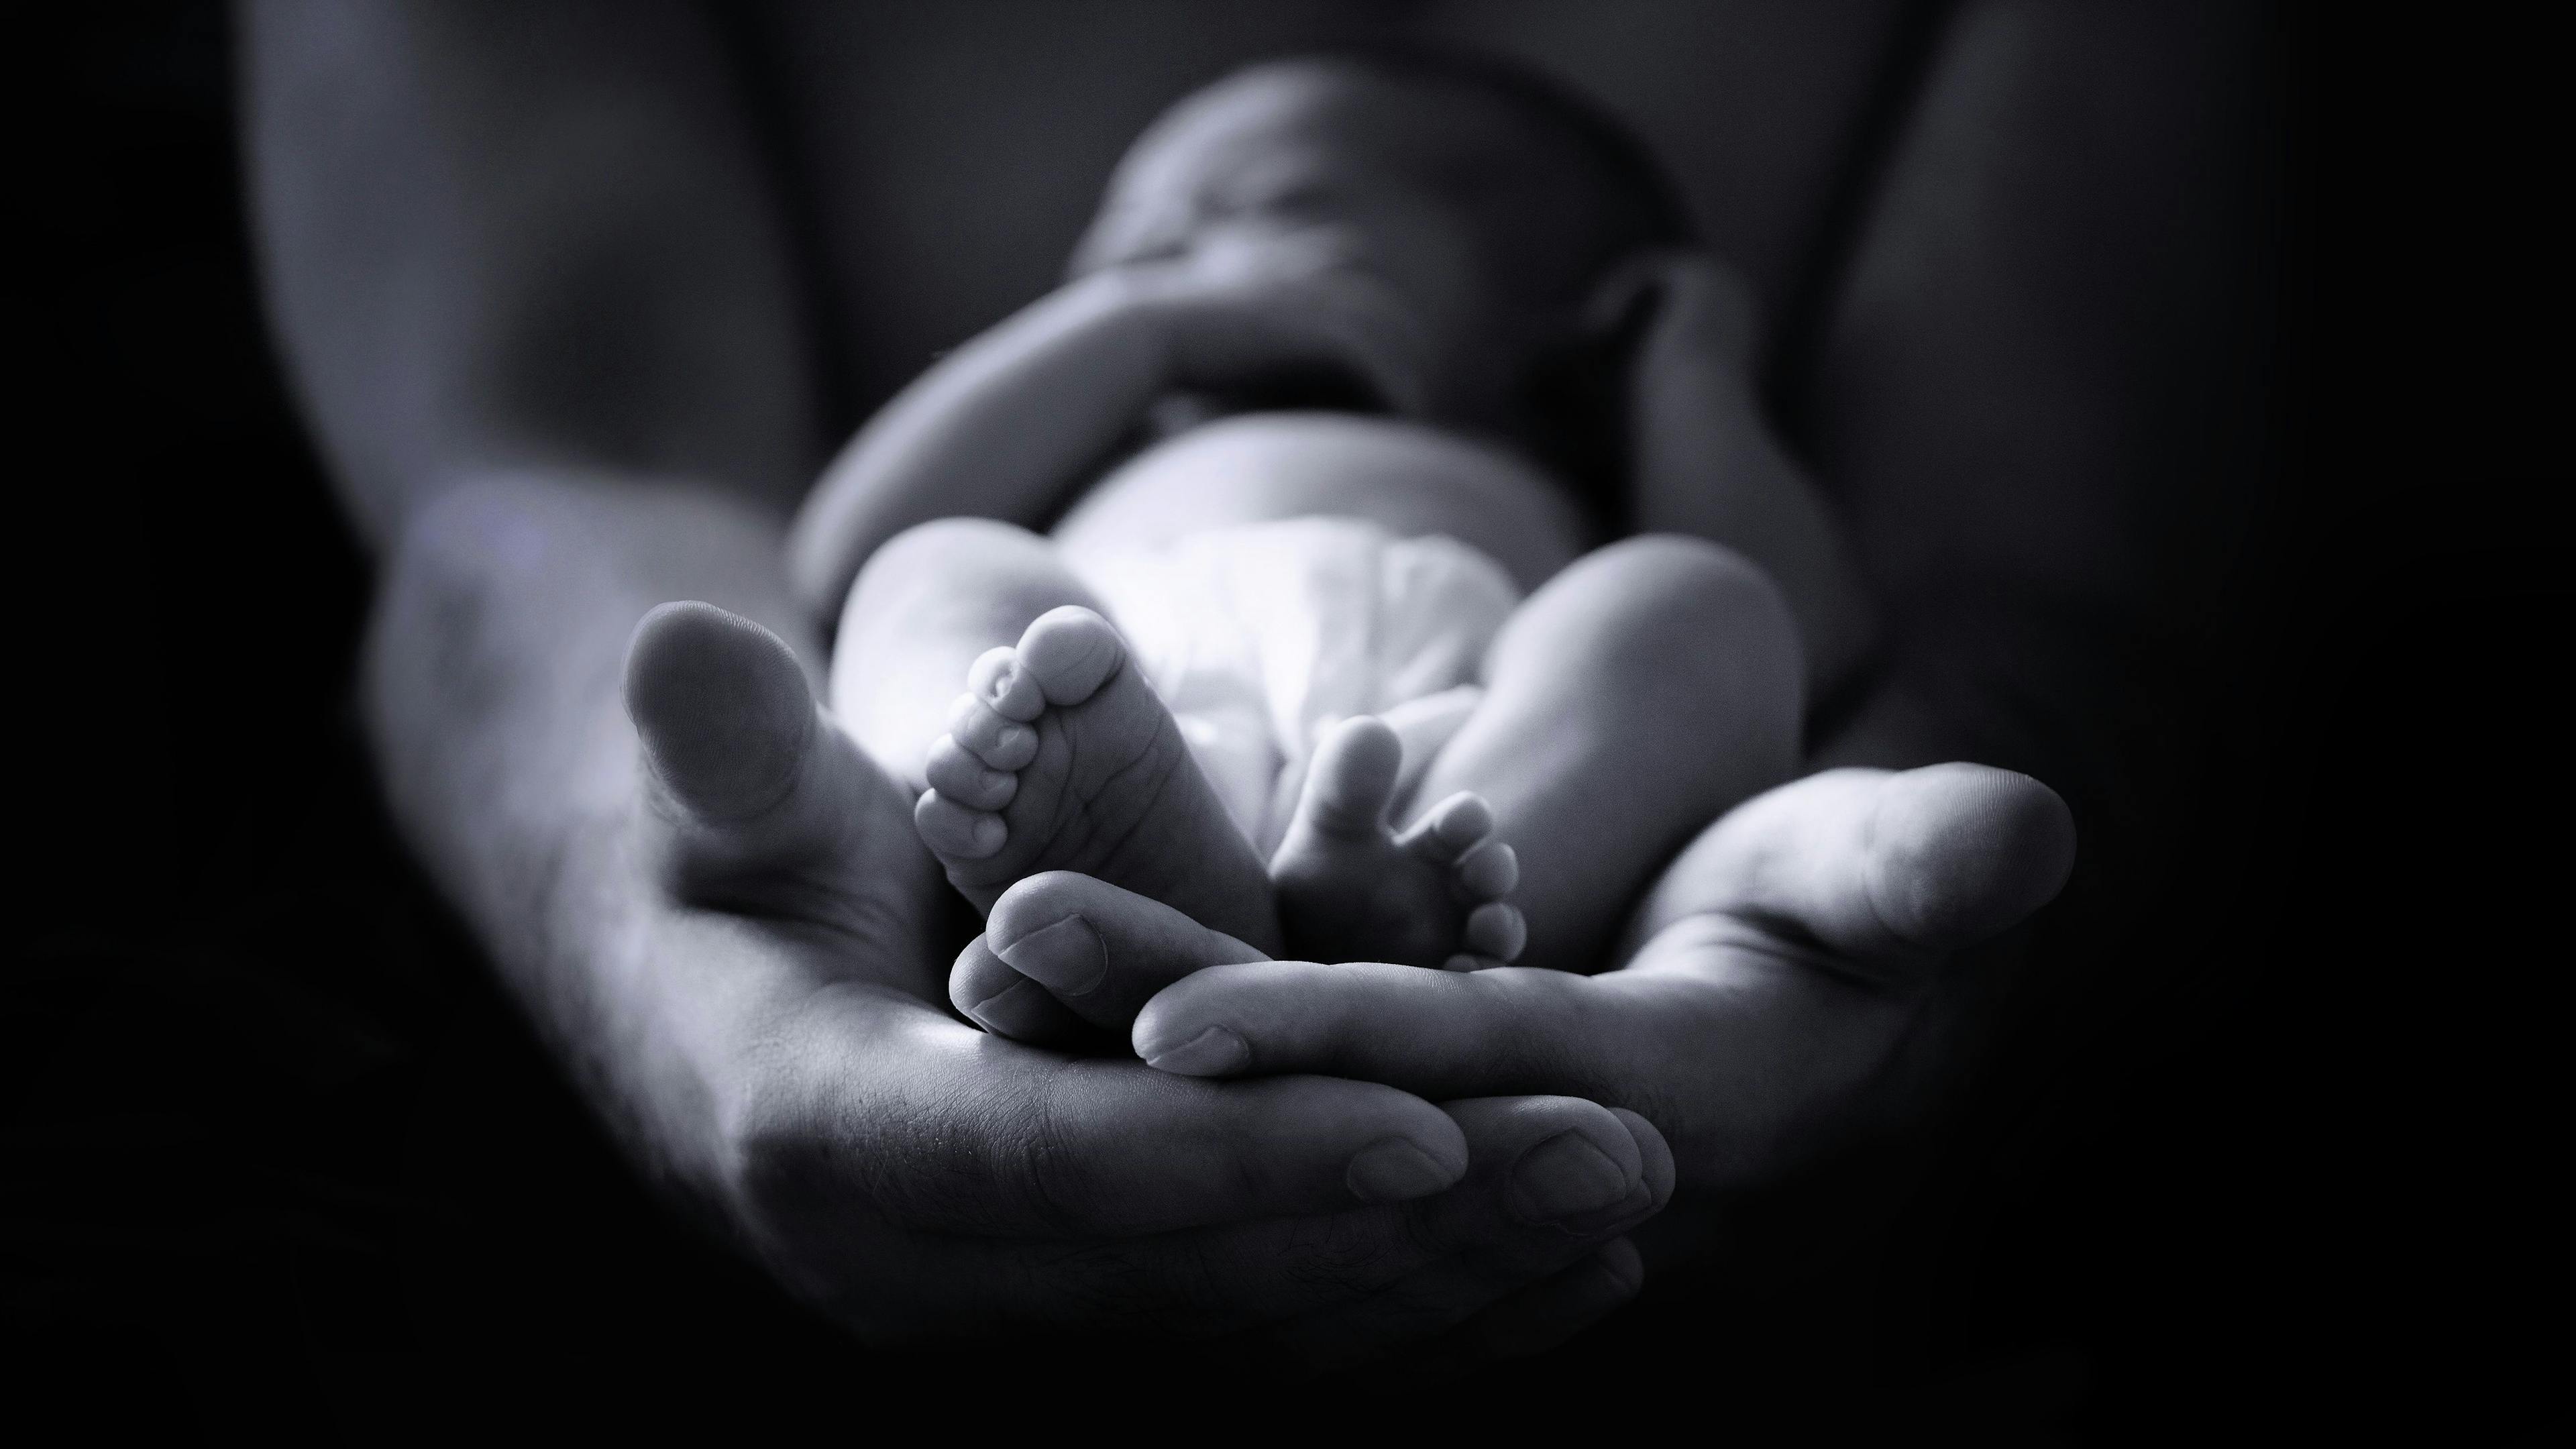 Hands Holding Newborn Baby | image credit: BazziBa - stock.adobe.com